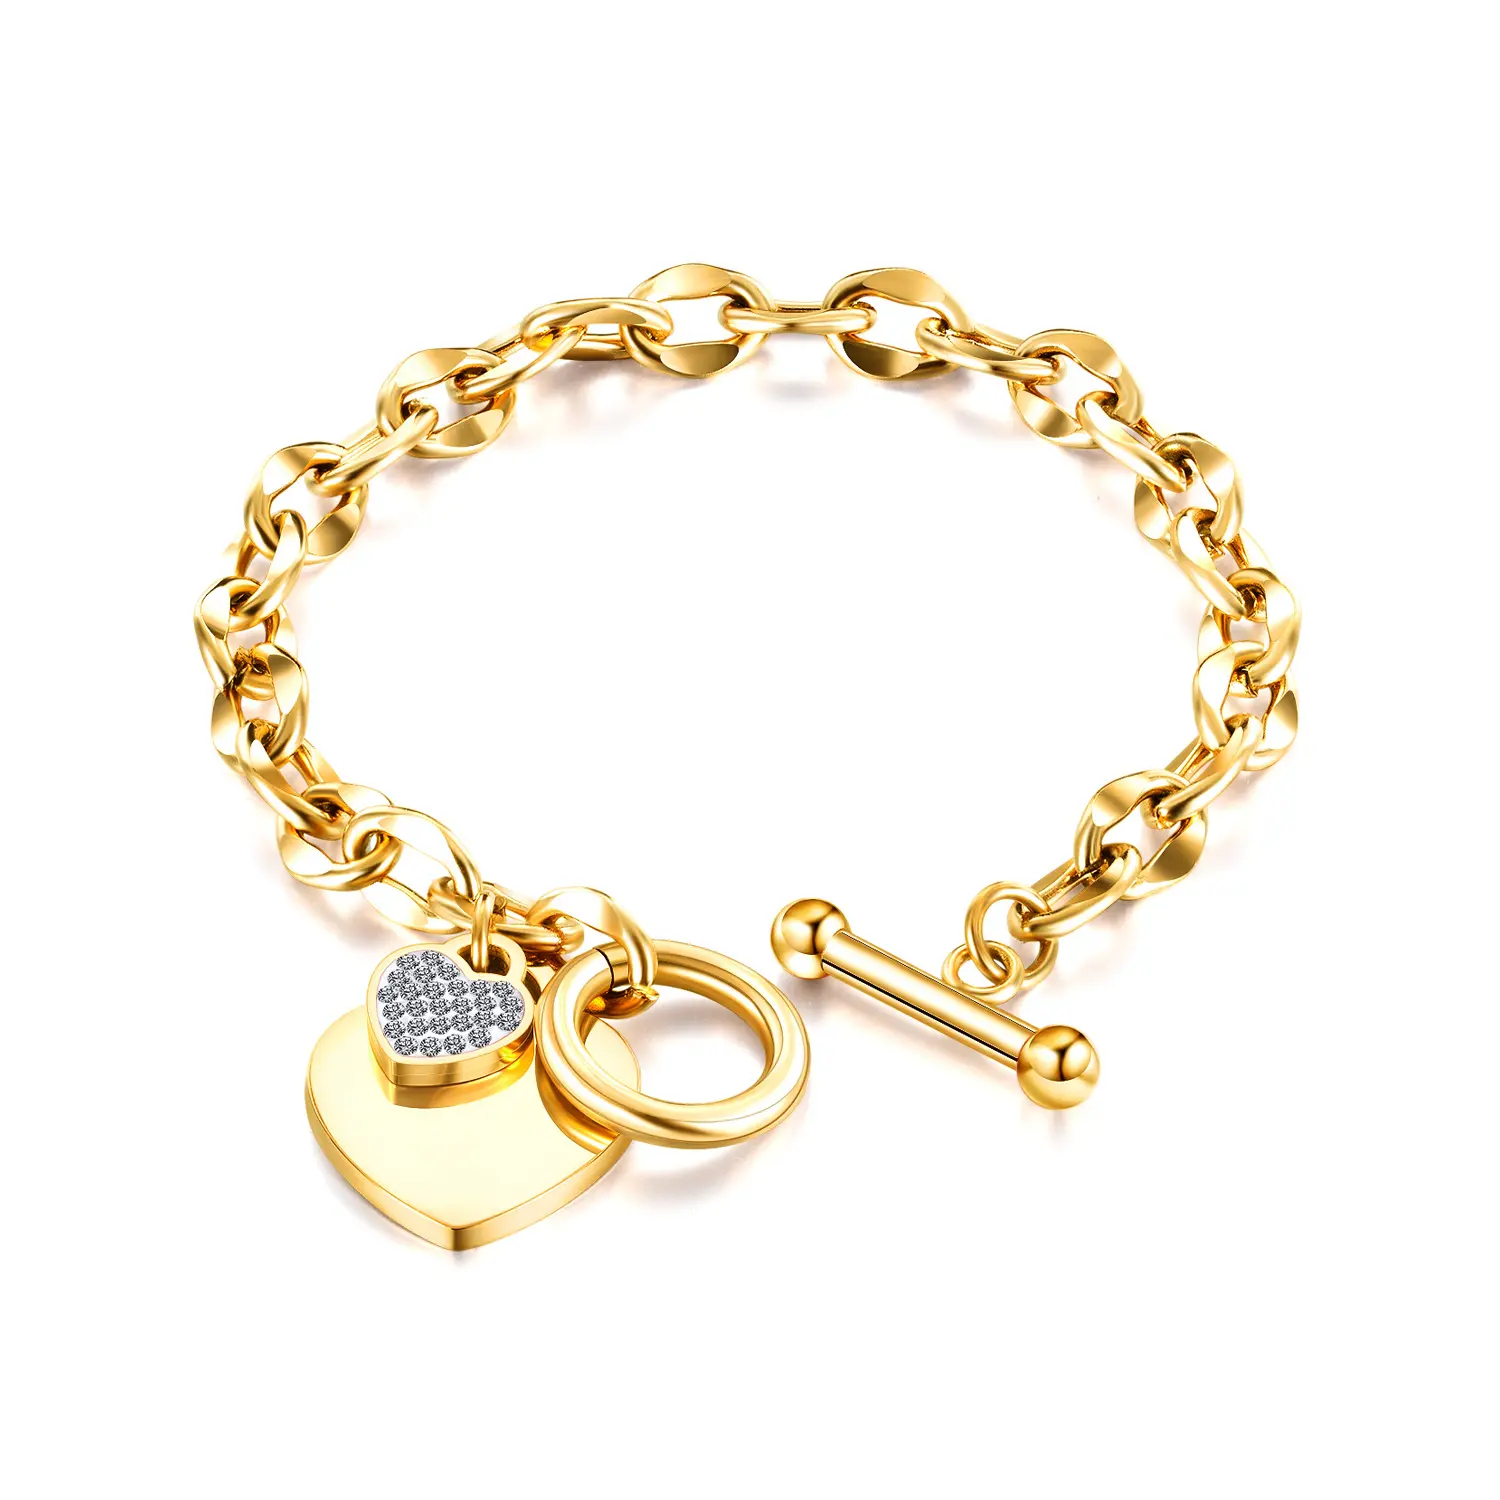 Brighton jewelry fashion jewelry bracelets bangles magnetic bracelet titanium heart lock bangle bracelet